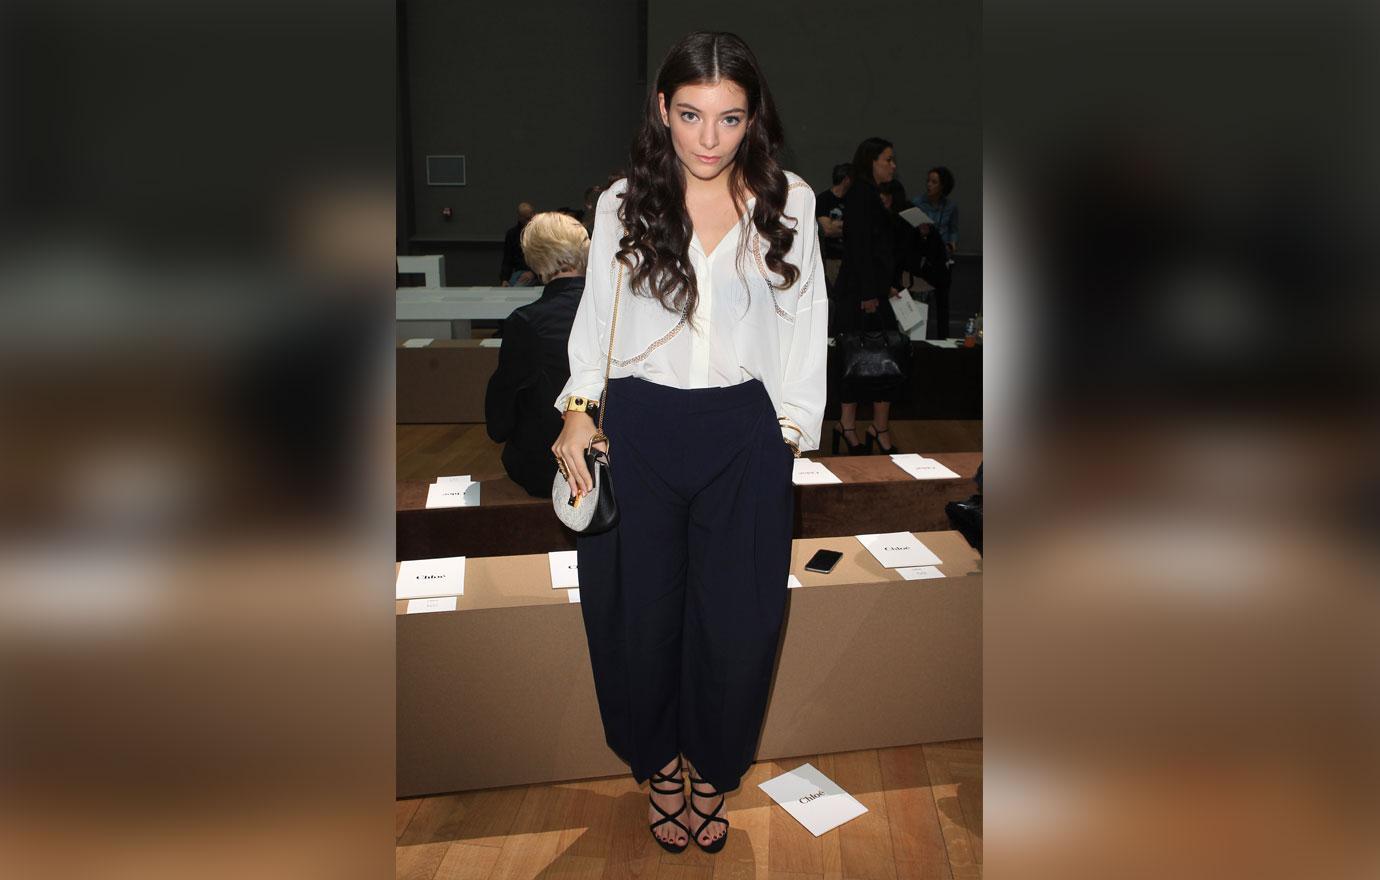 I see no imitation at work': Set designer weighs in on Lorde, Kanye West  accusation